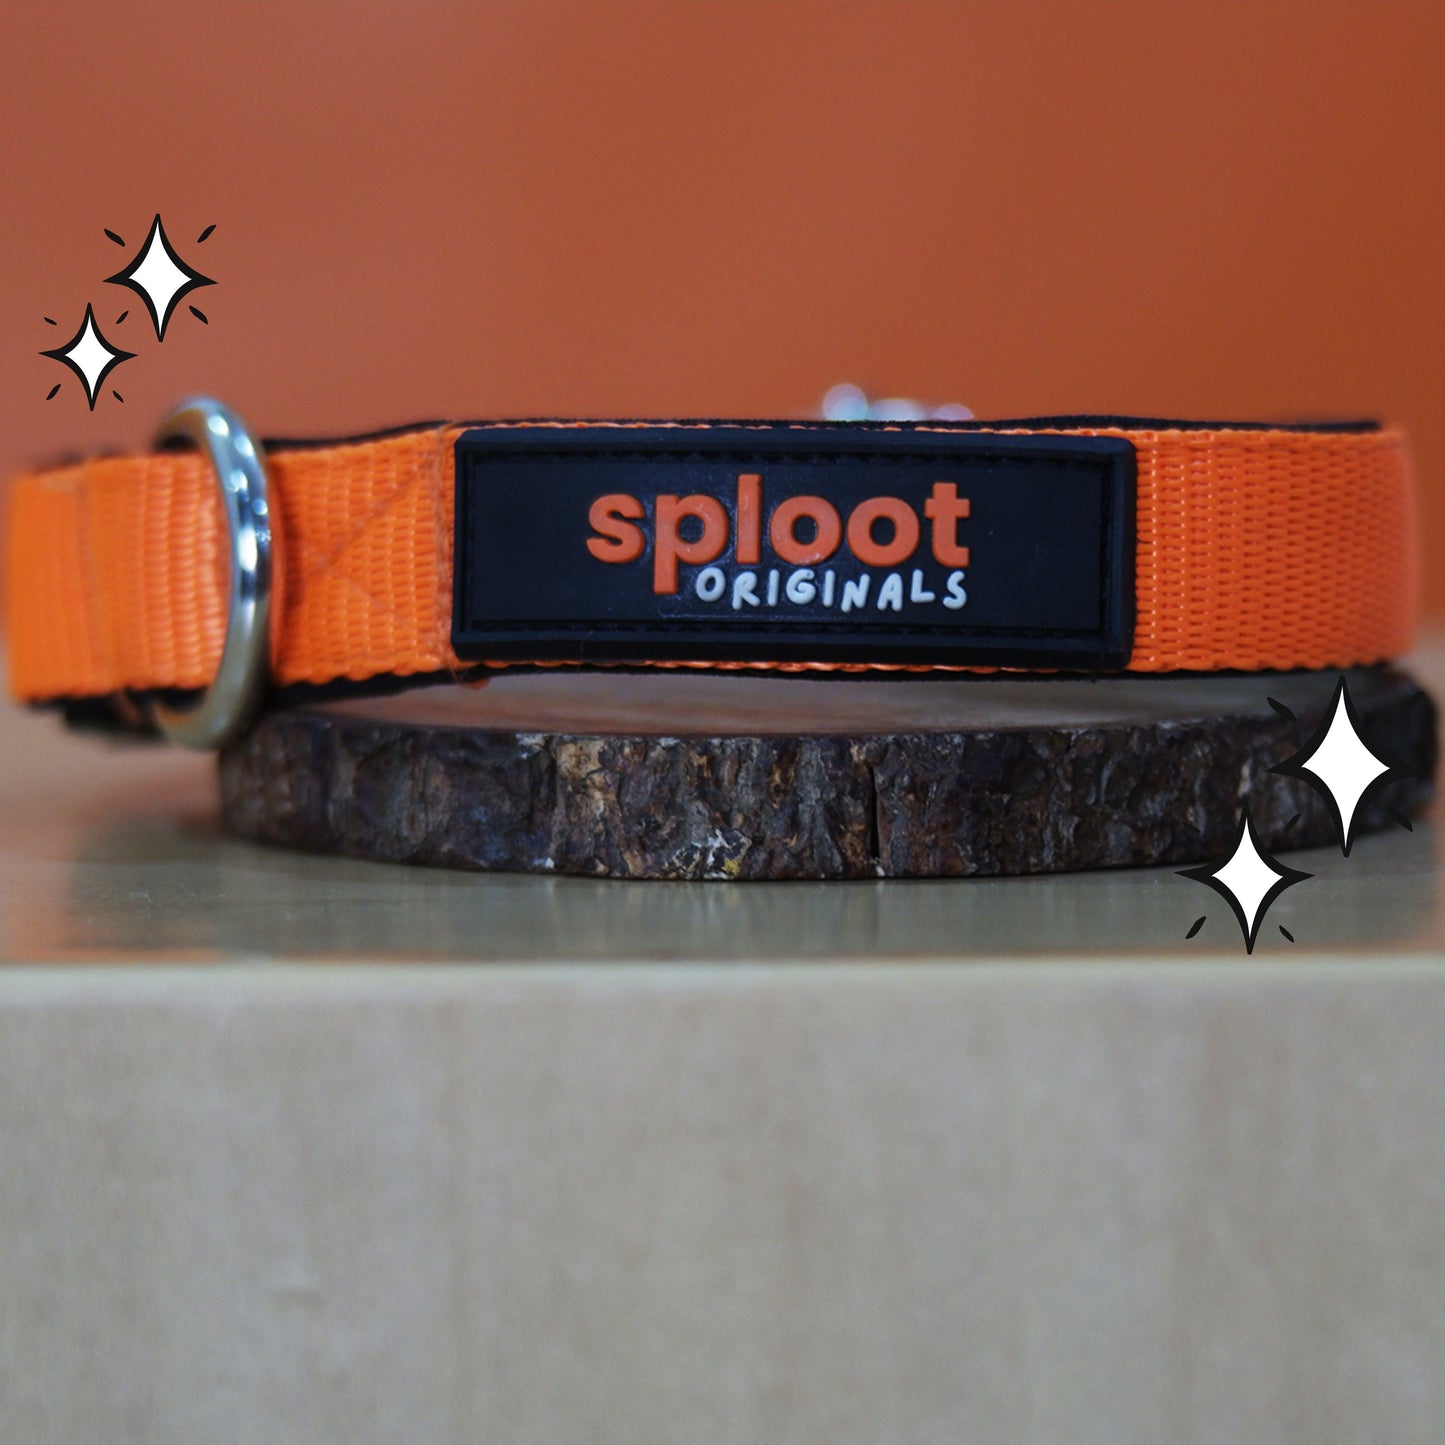 Sploot Originals - Collar - Orange and Black - Sploot